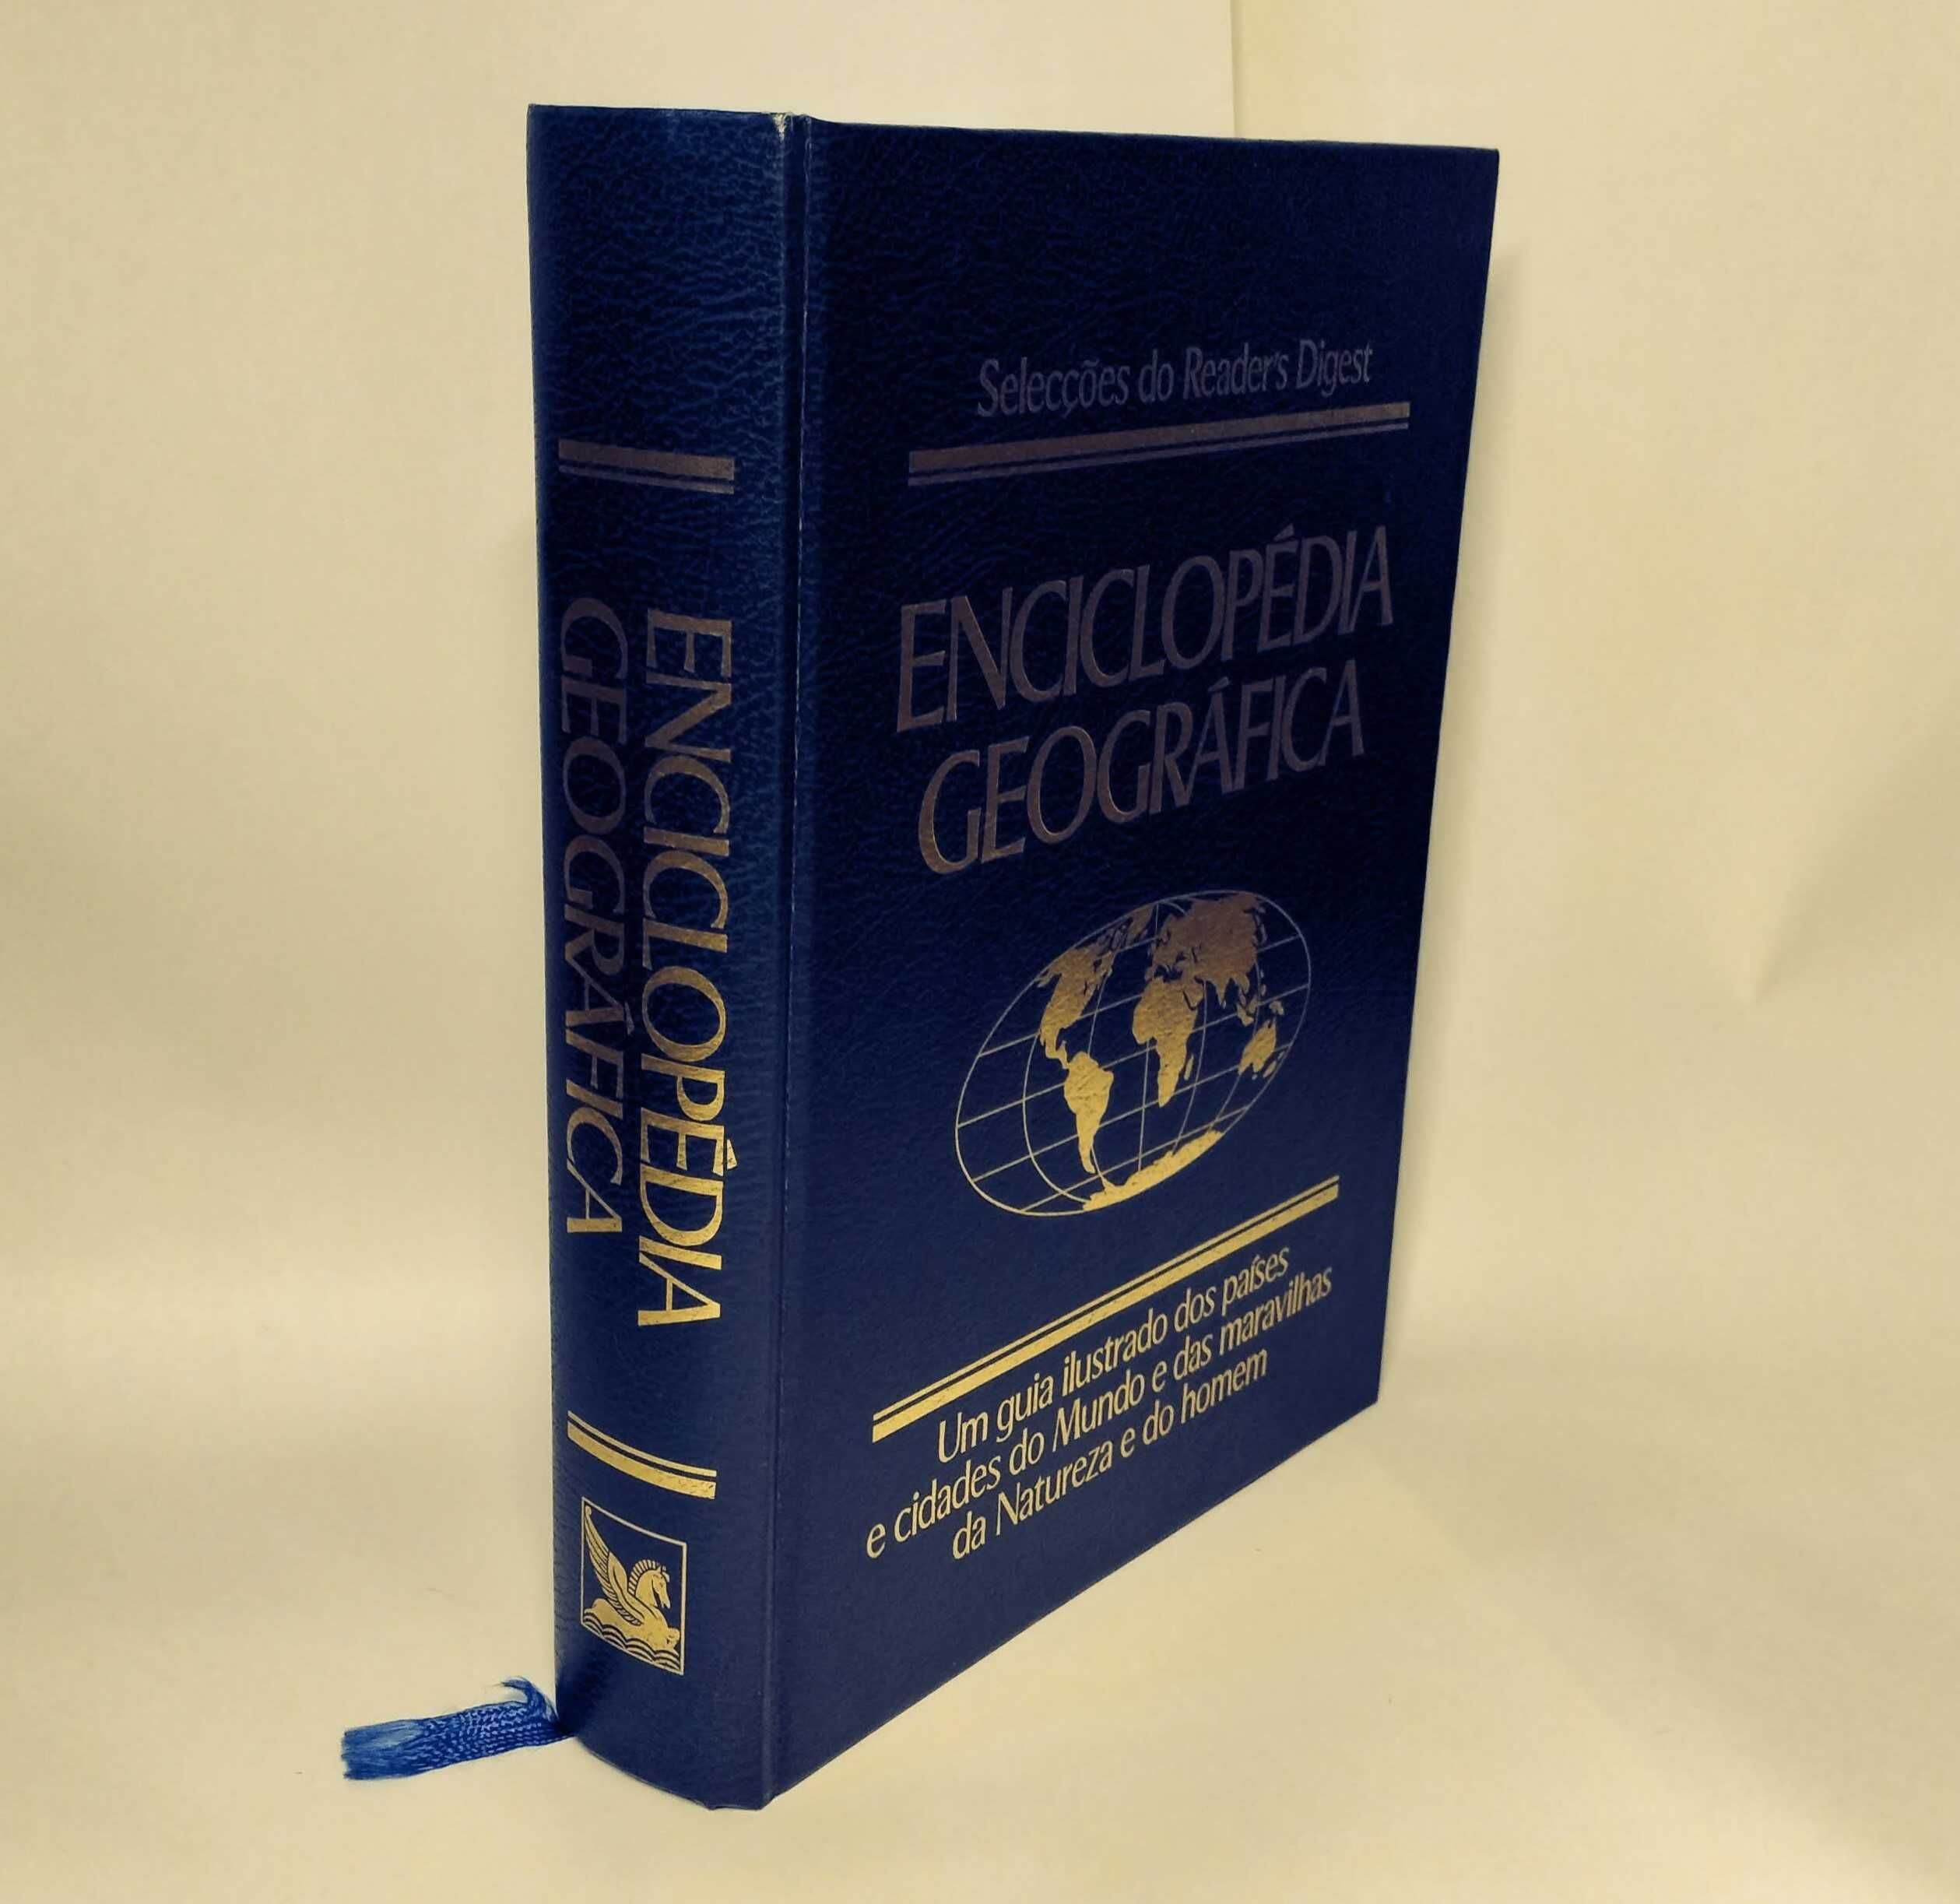 Enciclopédia Geográfica Reader's Digest